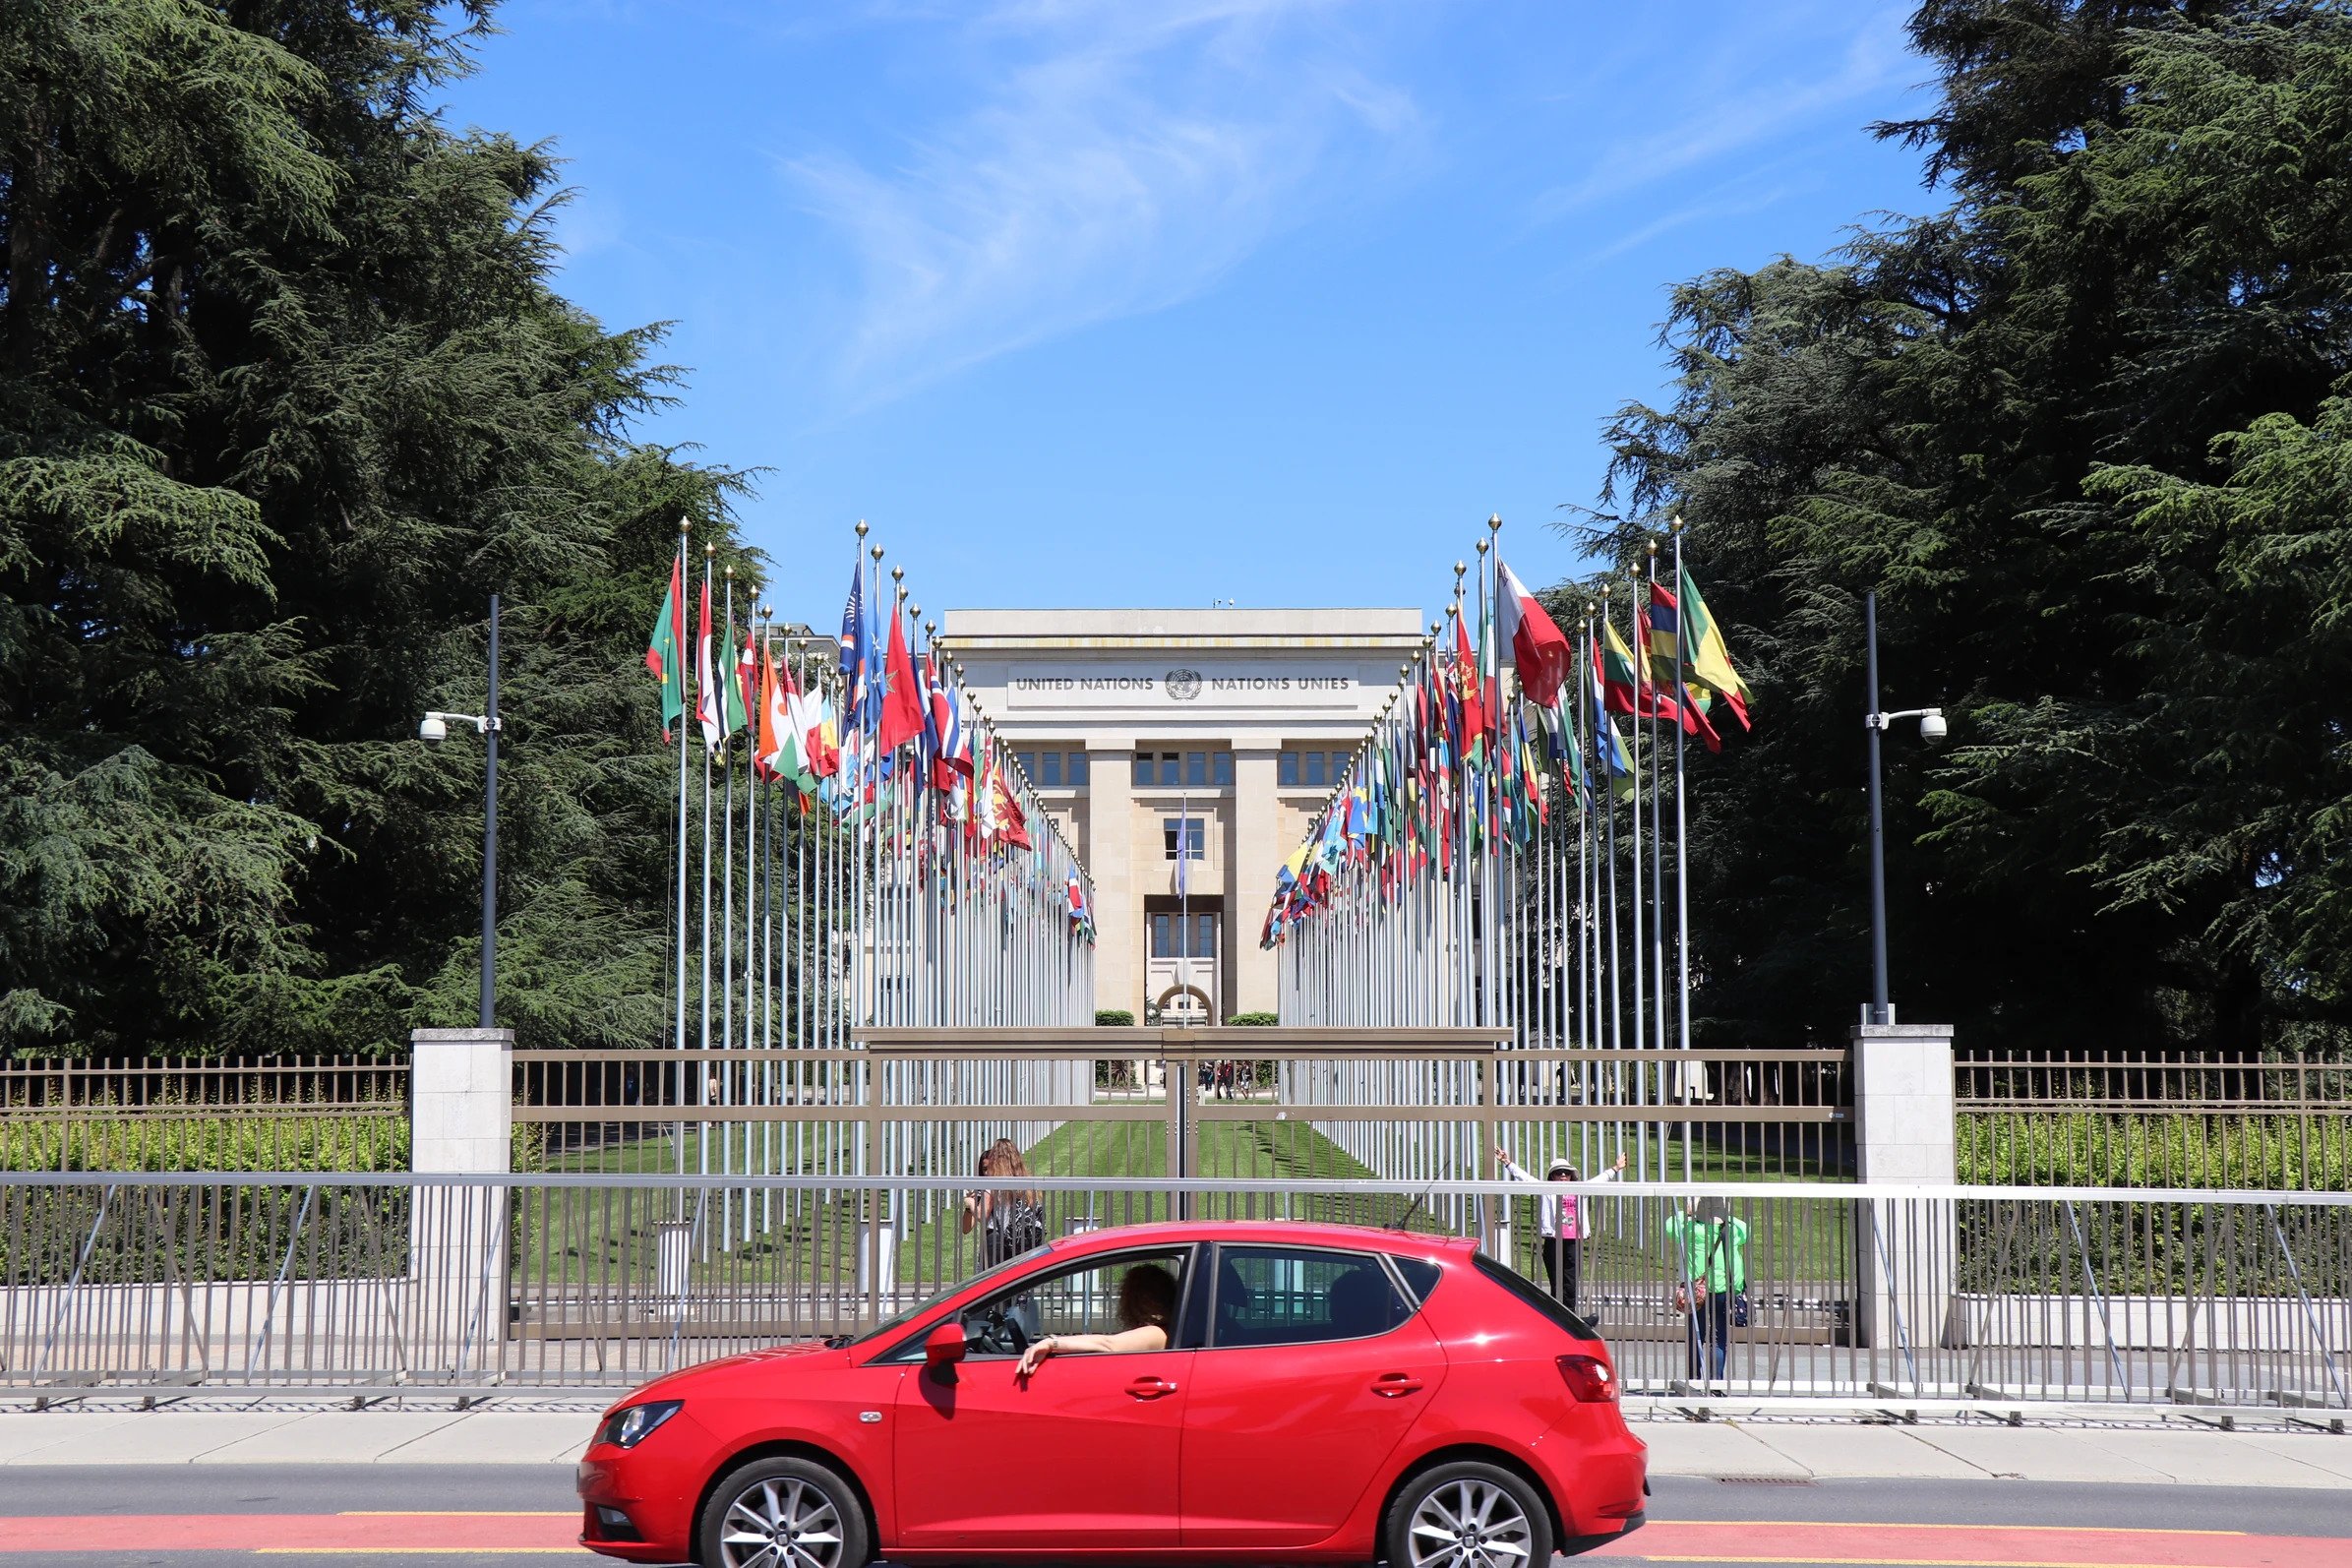 United Nations Office at Geneva 